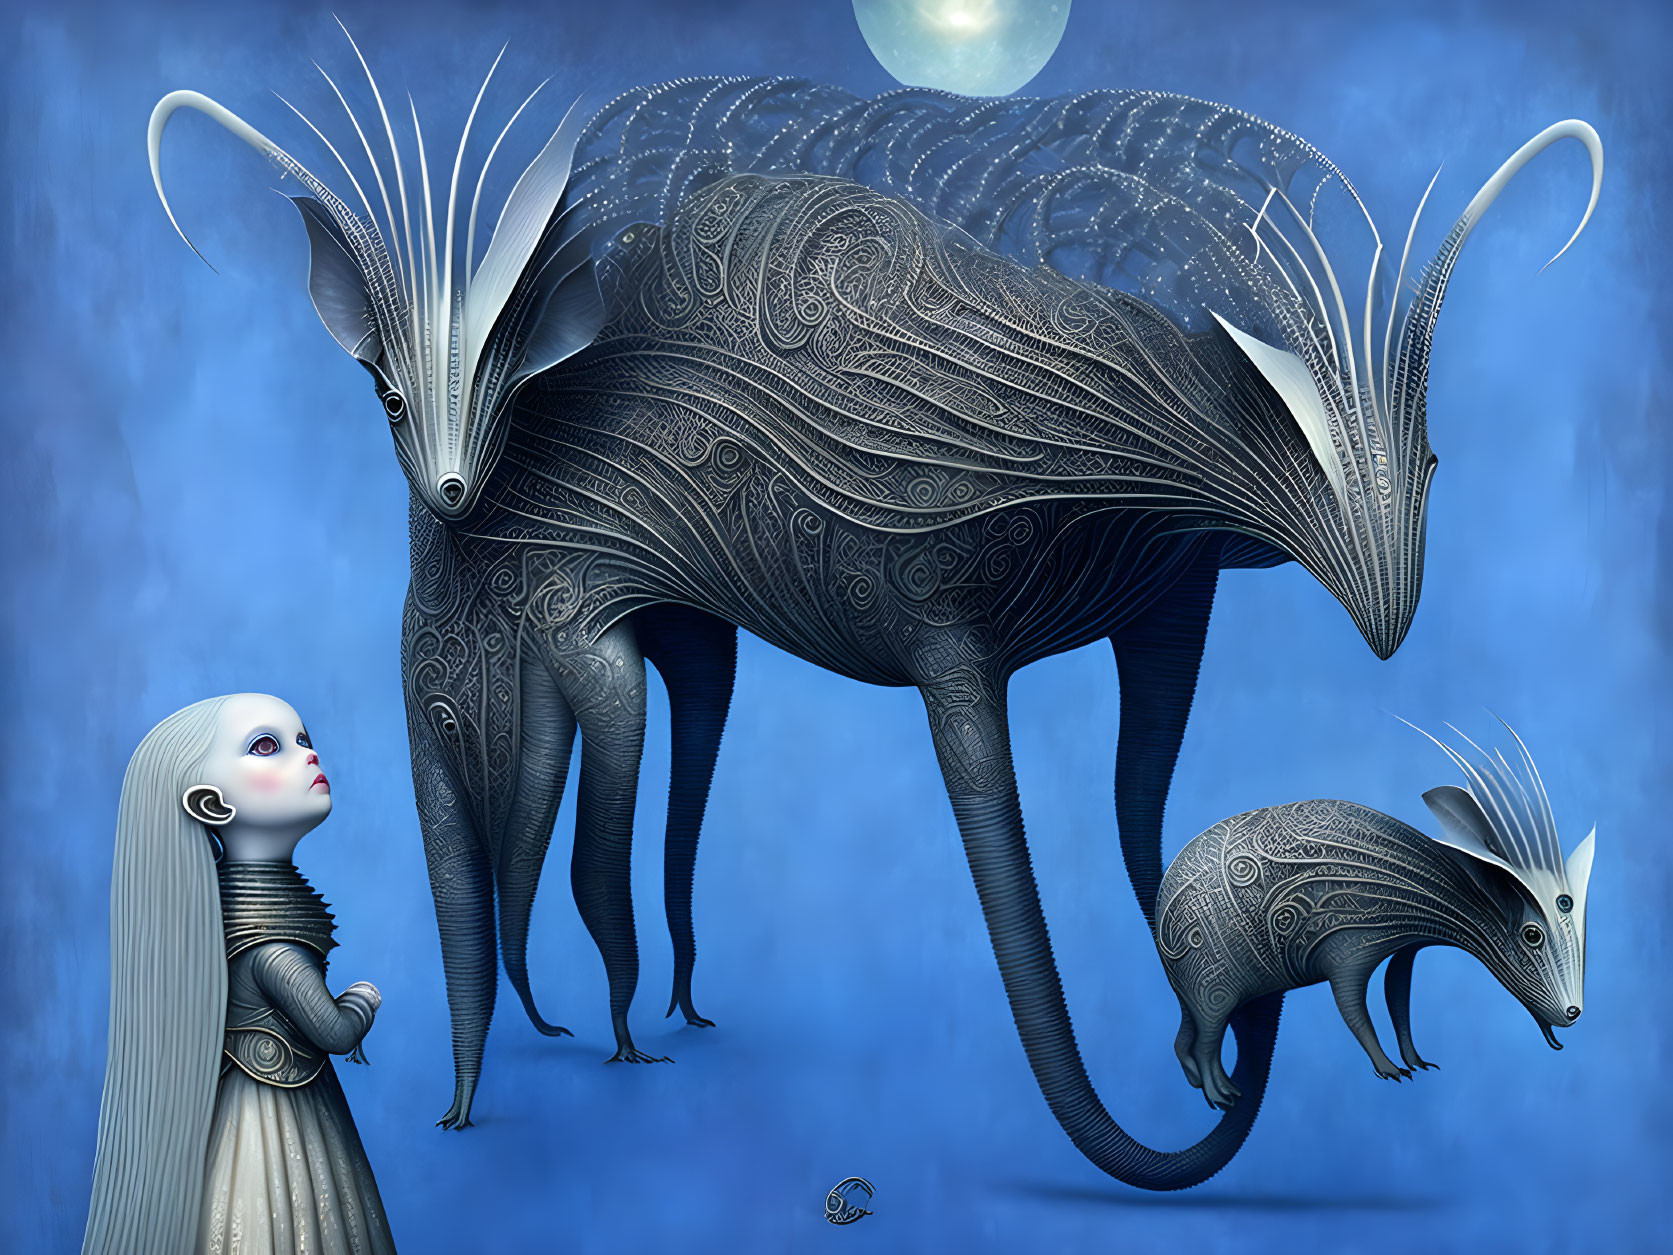 Surreal illustration of girl and ornate creatures under moonlit sky